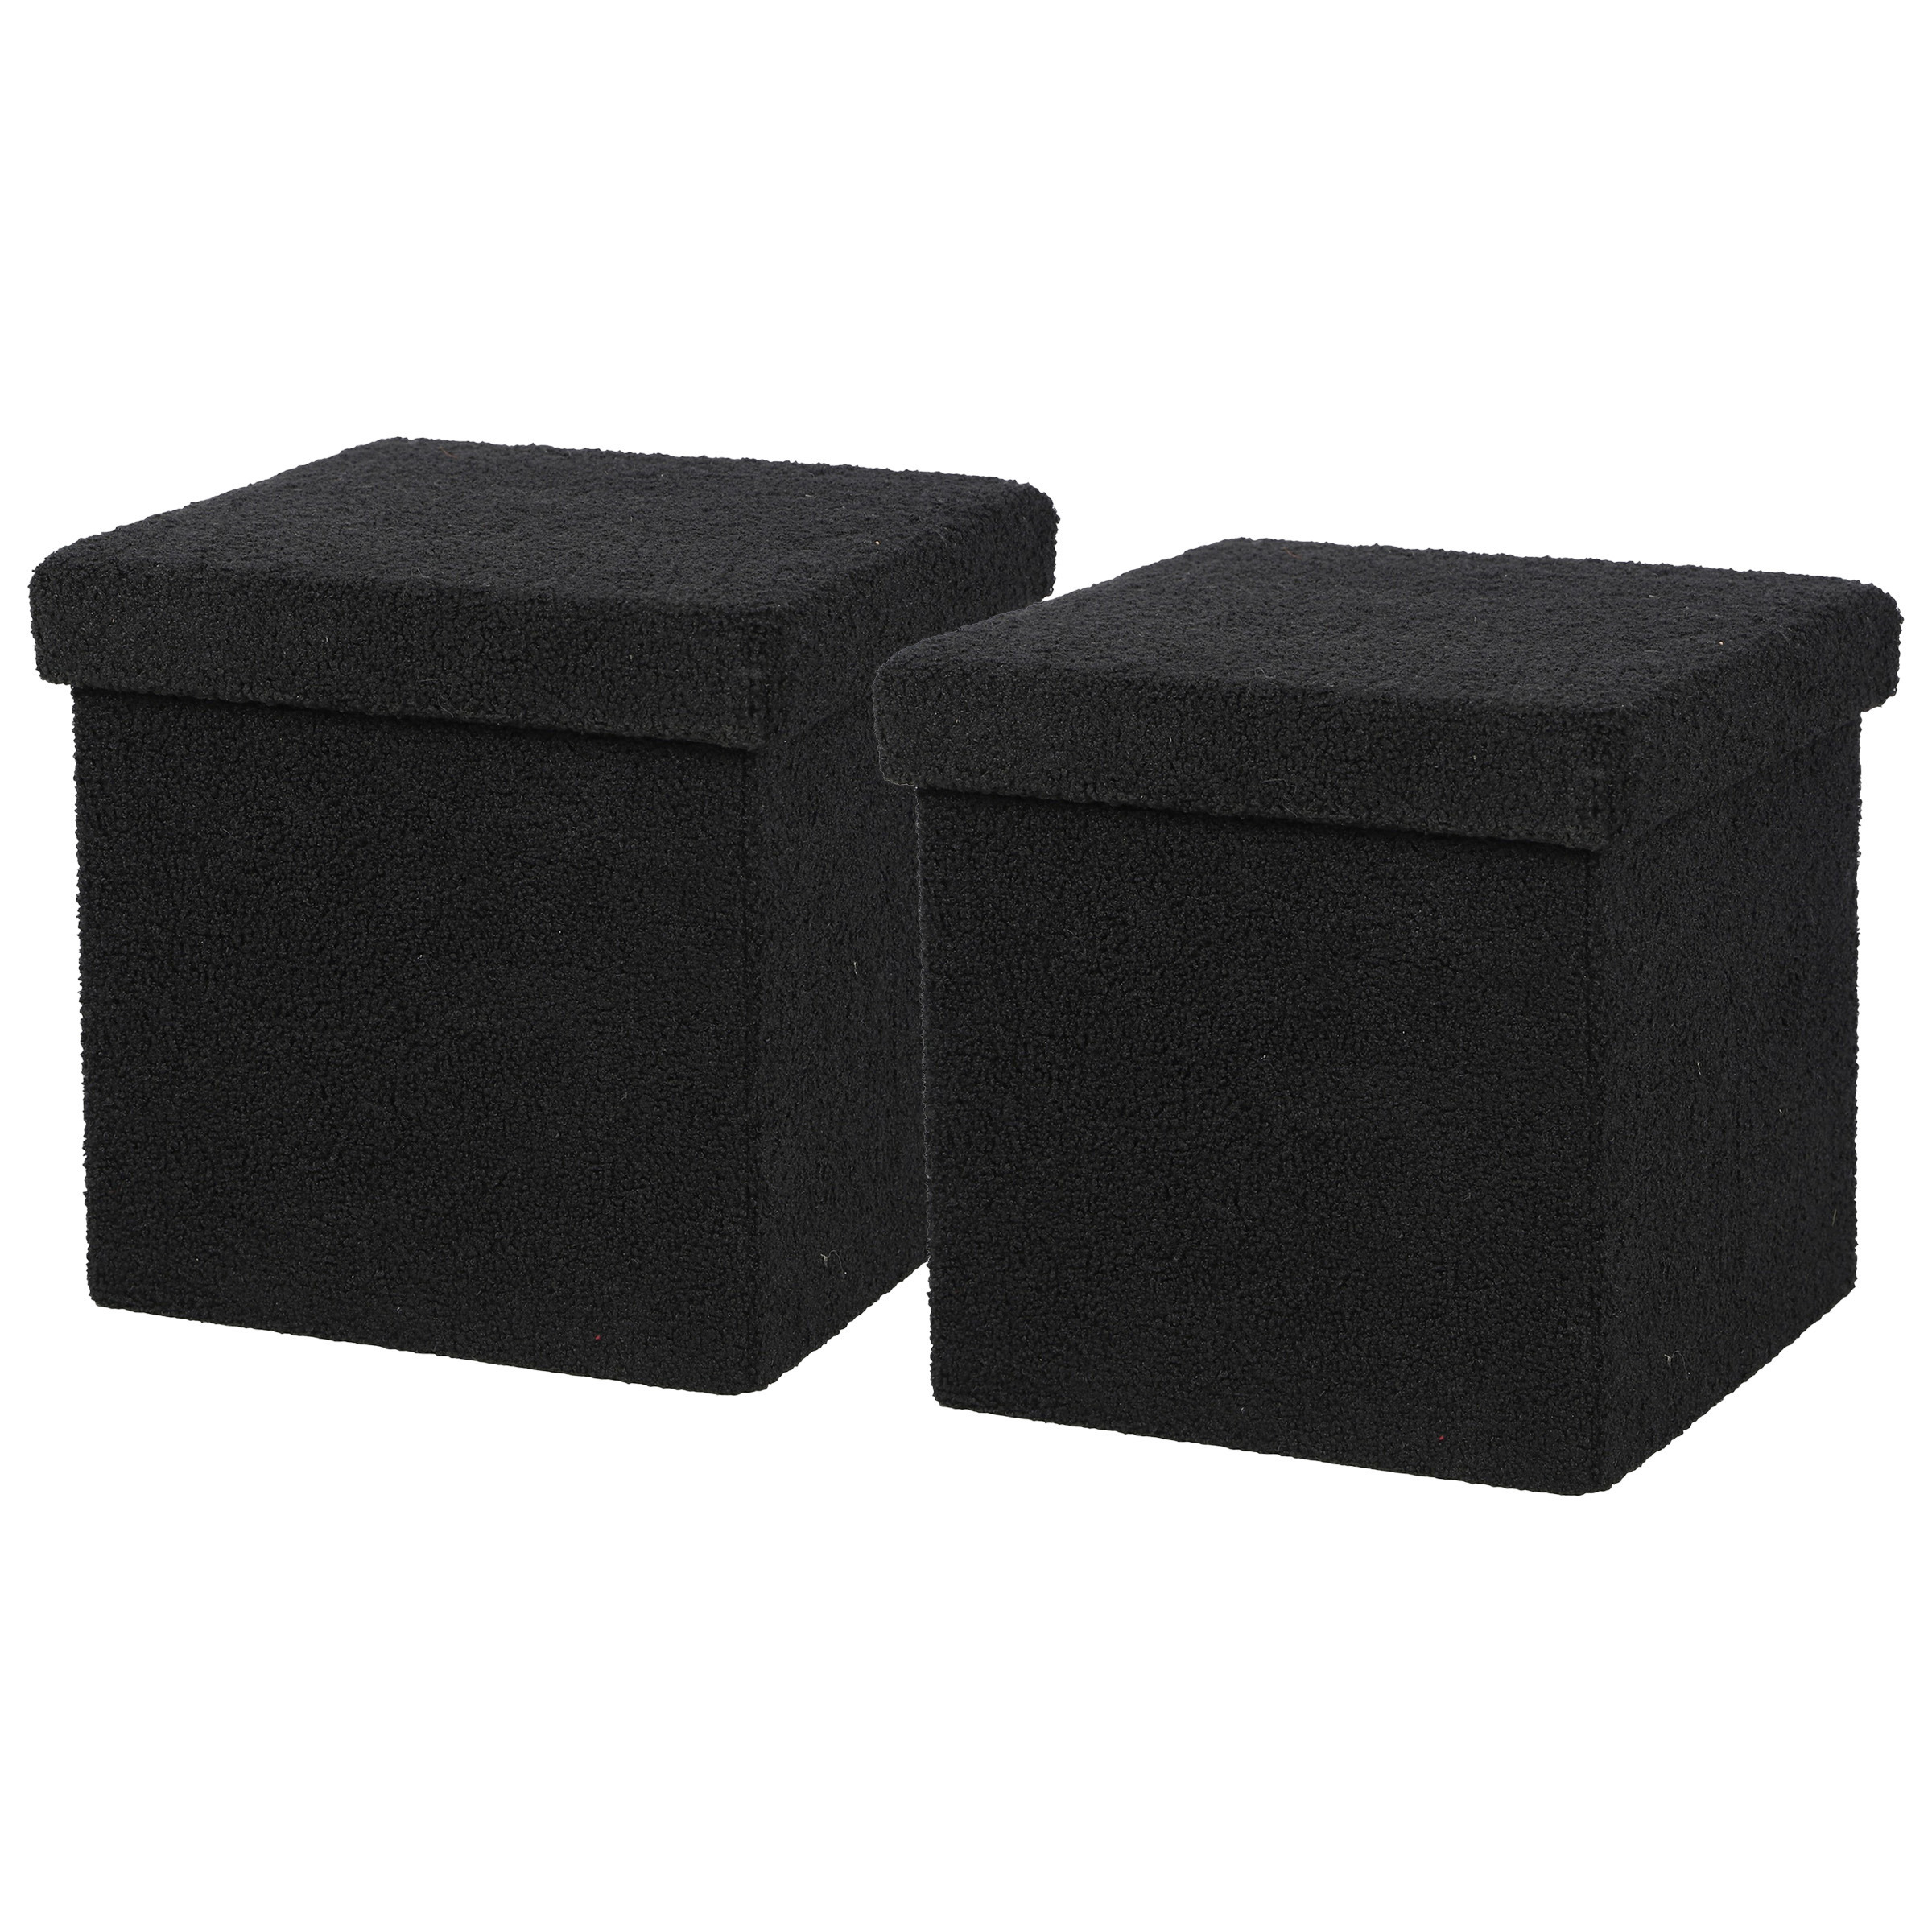 Urban Living Poef Square BOX 2x hocker opbergbox zwart polyester-mdf 38 x 38 cm opvouwbaar